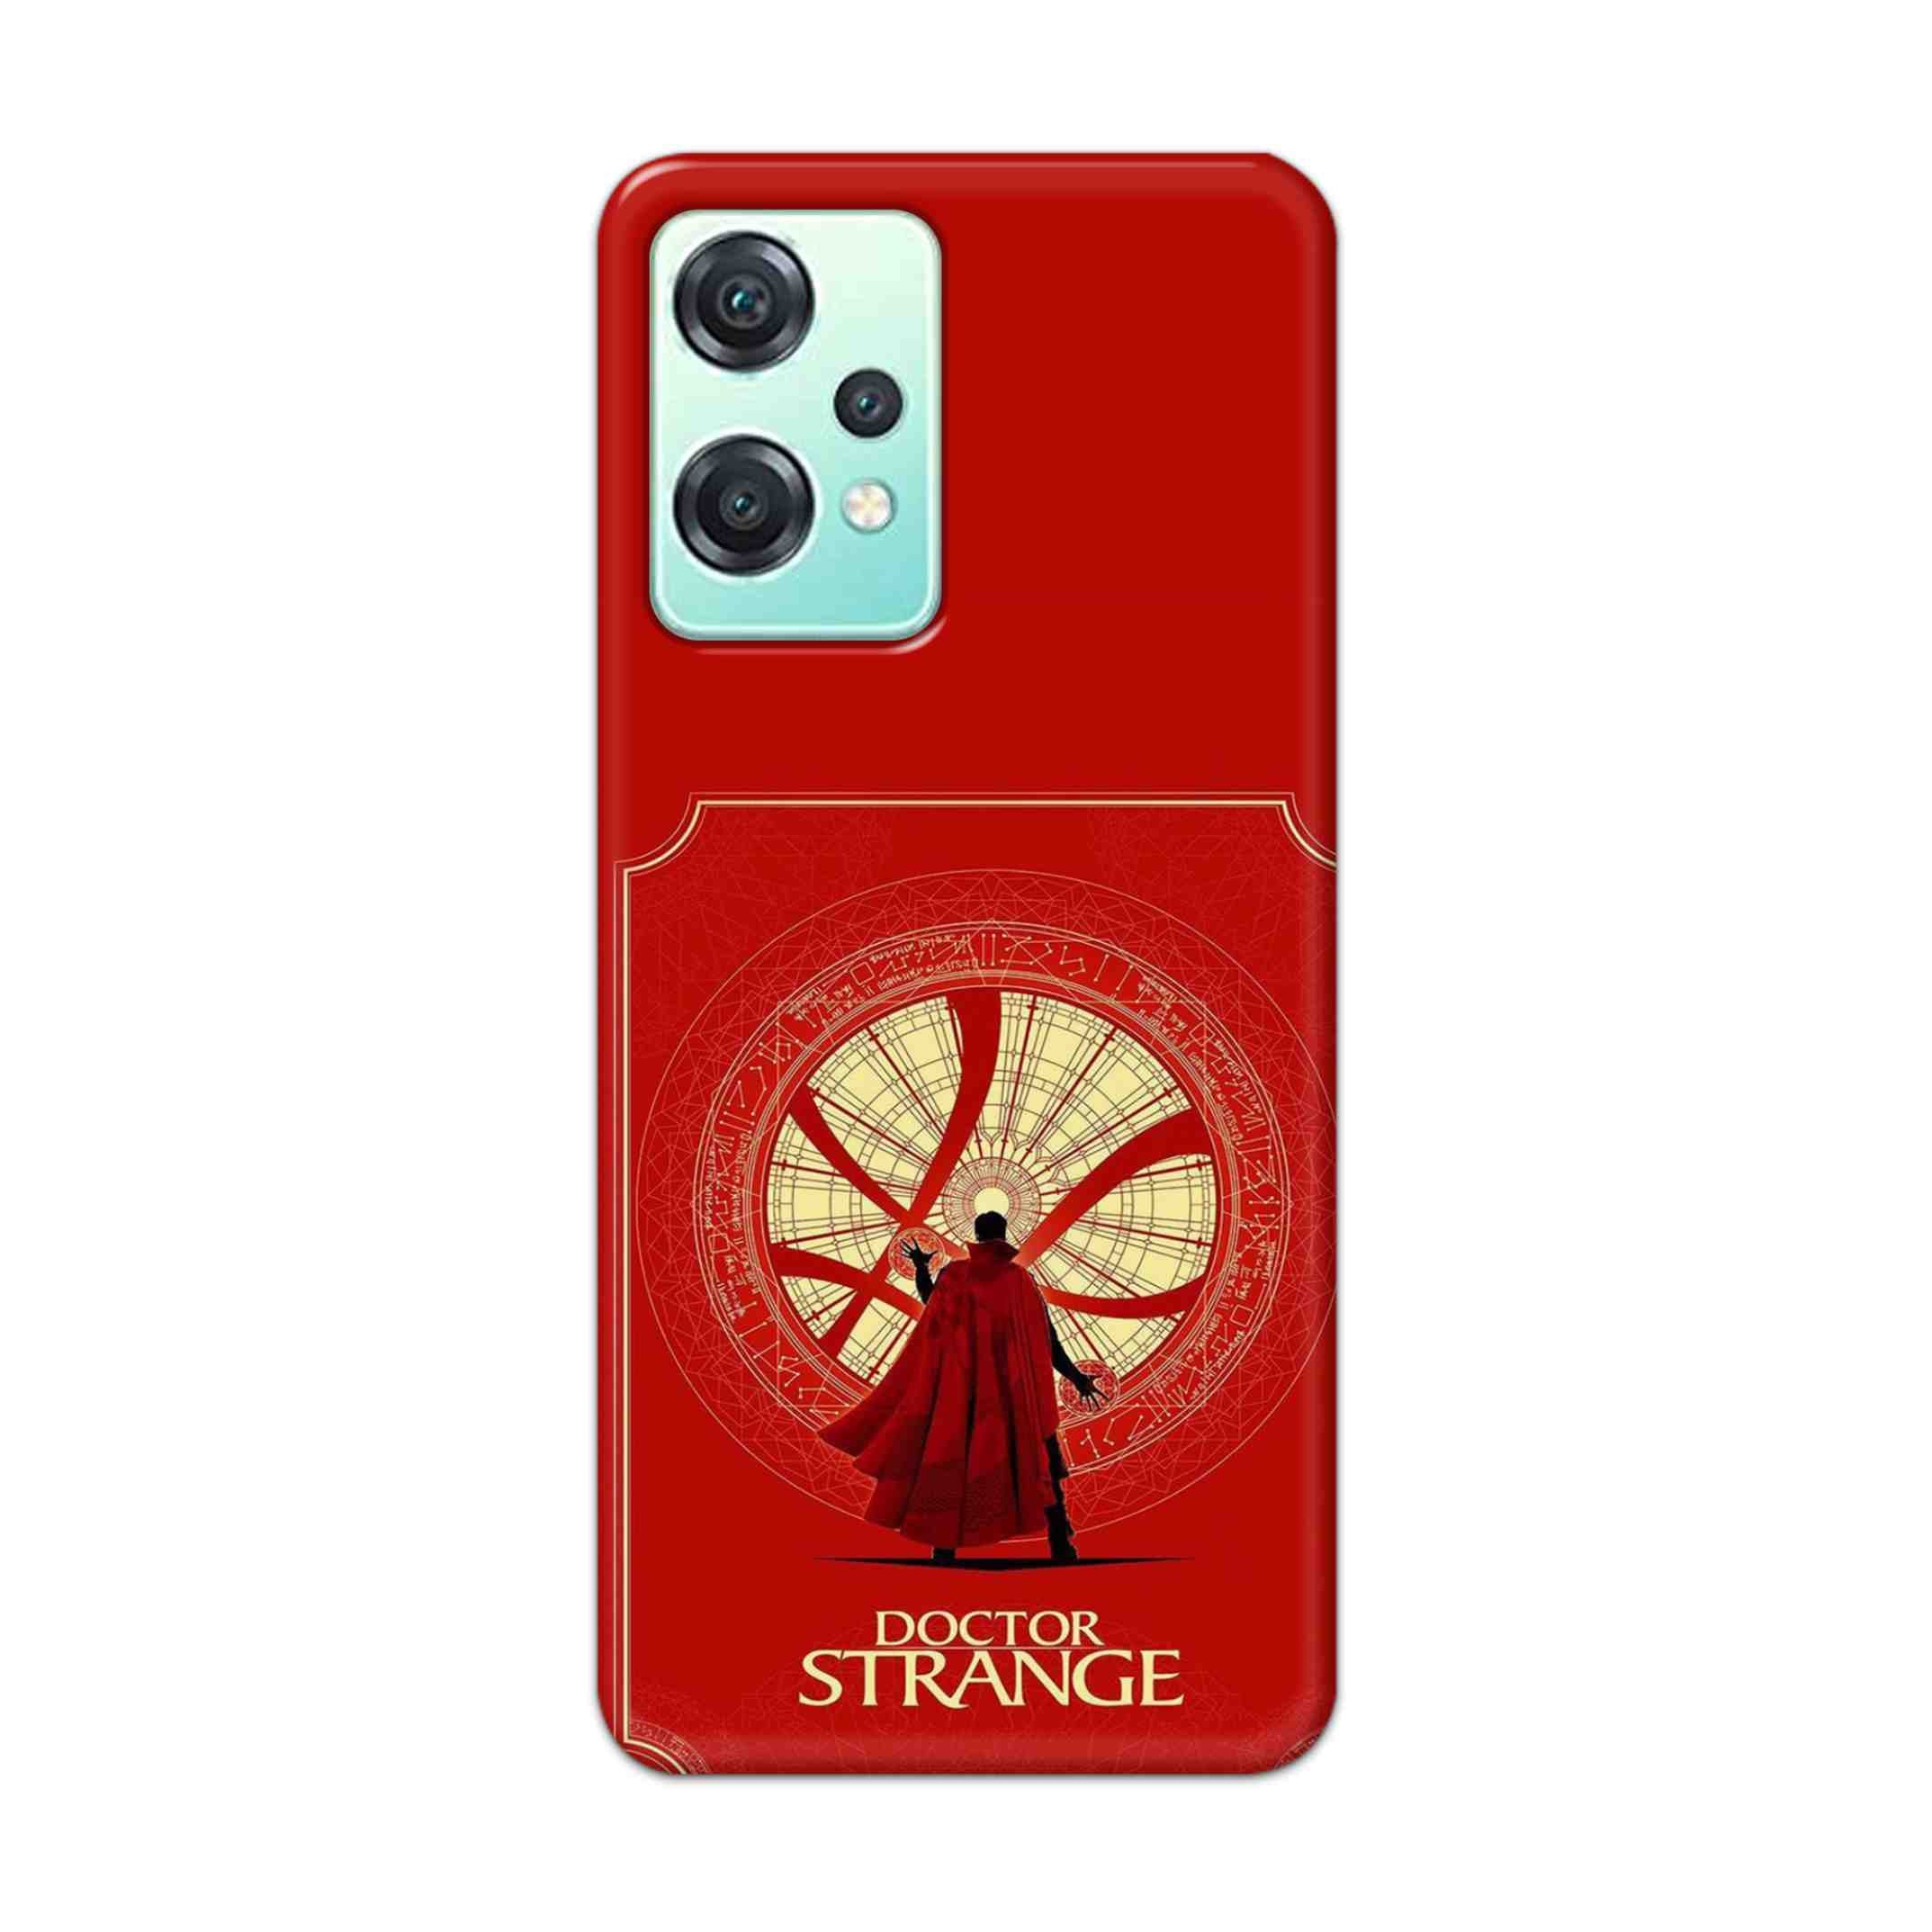 Buy Blood Doctor Strange Hard Back Mobile Phone Case Cover For OnePlus Nord CE 2 Lite 5G Online